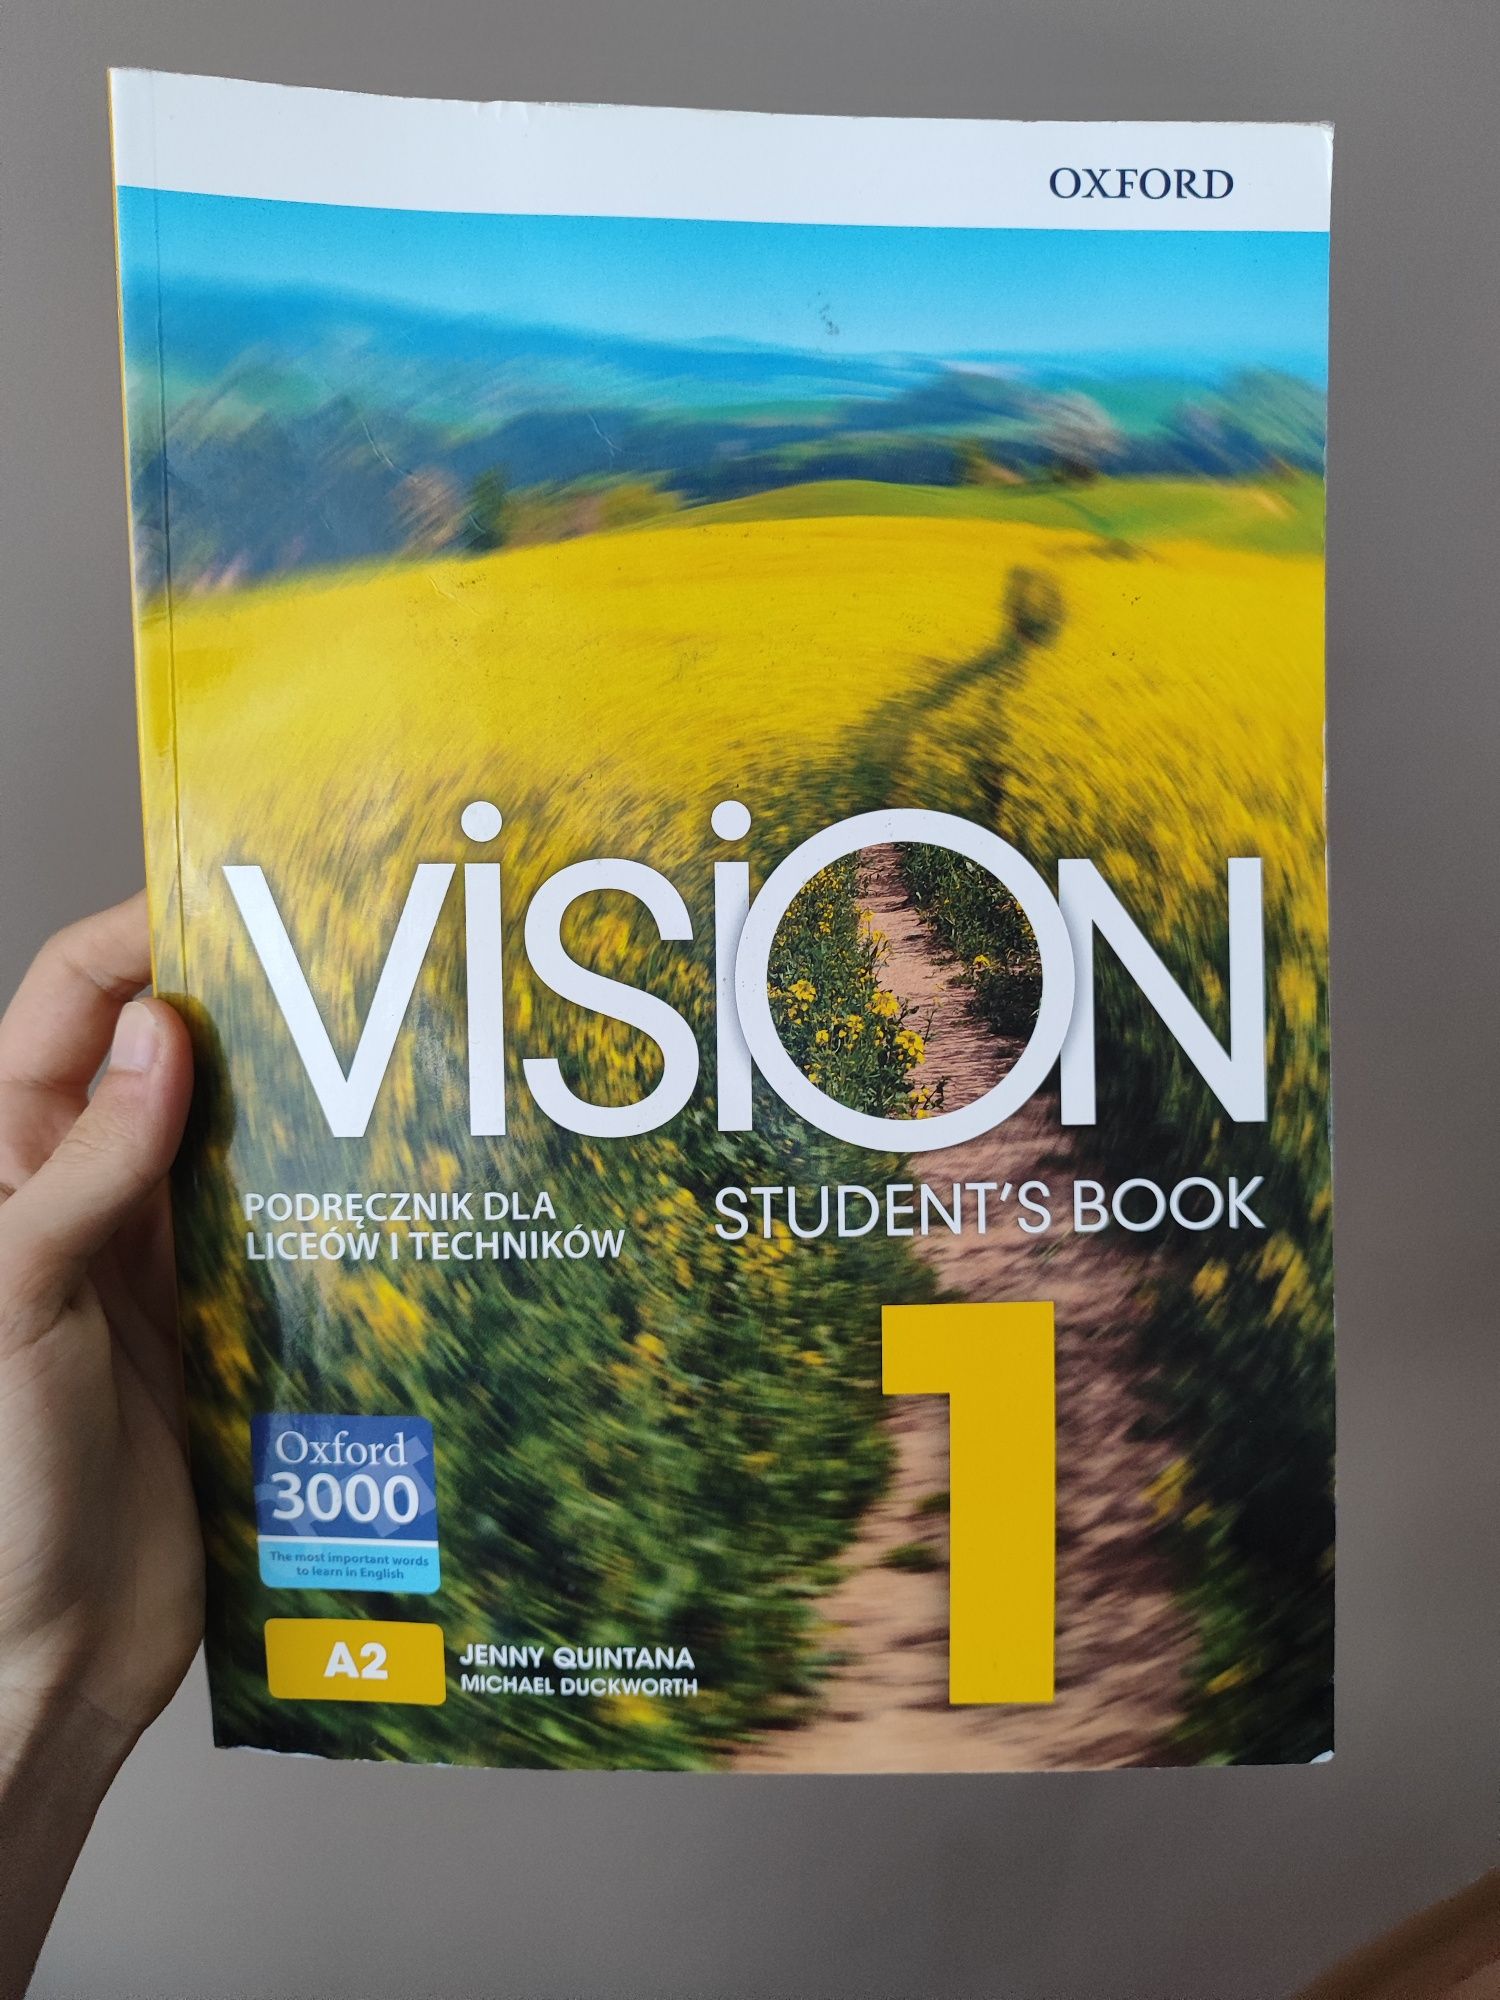 VISION Student's Book ! W Bardzo Dobry stanie !